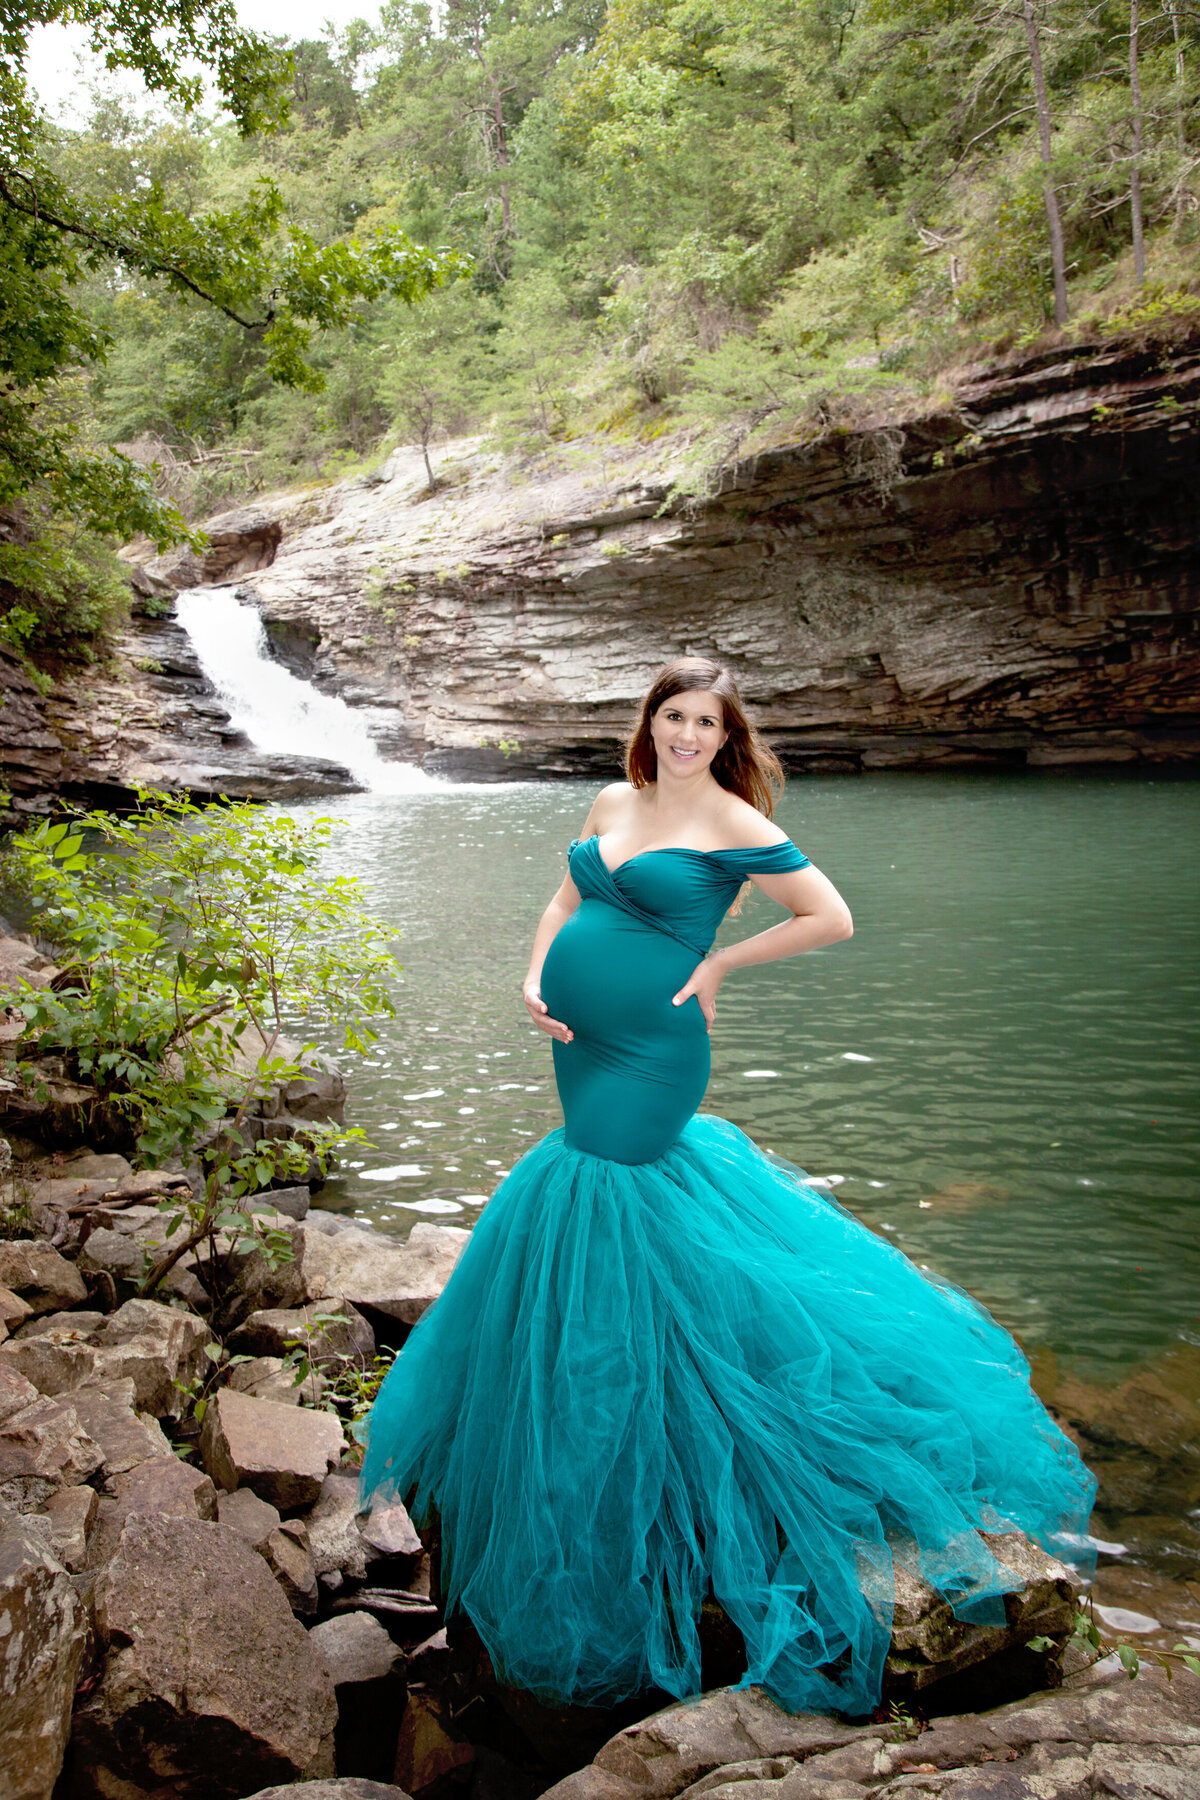 Sara-J-Williams-Photography-Georgia-Maternity-Portraits-20-Waterfall-Teal-Gown